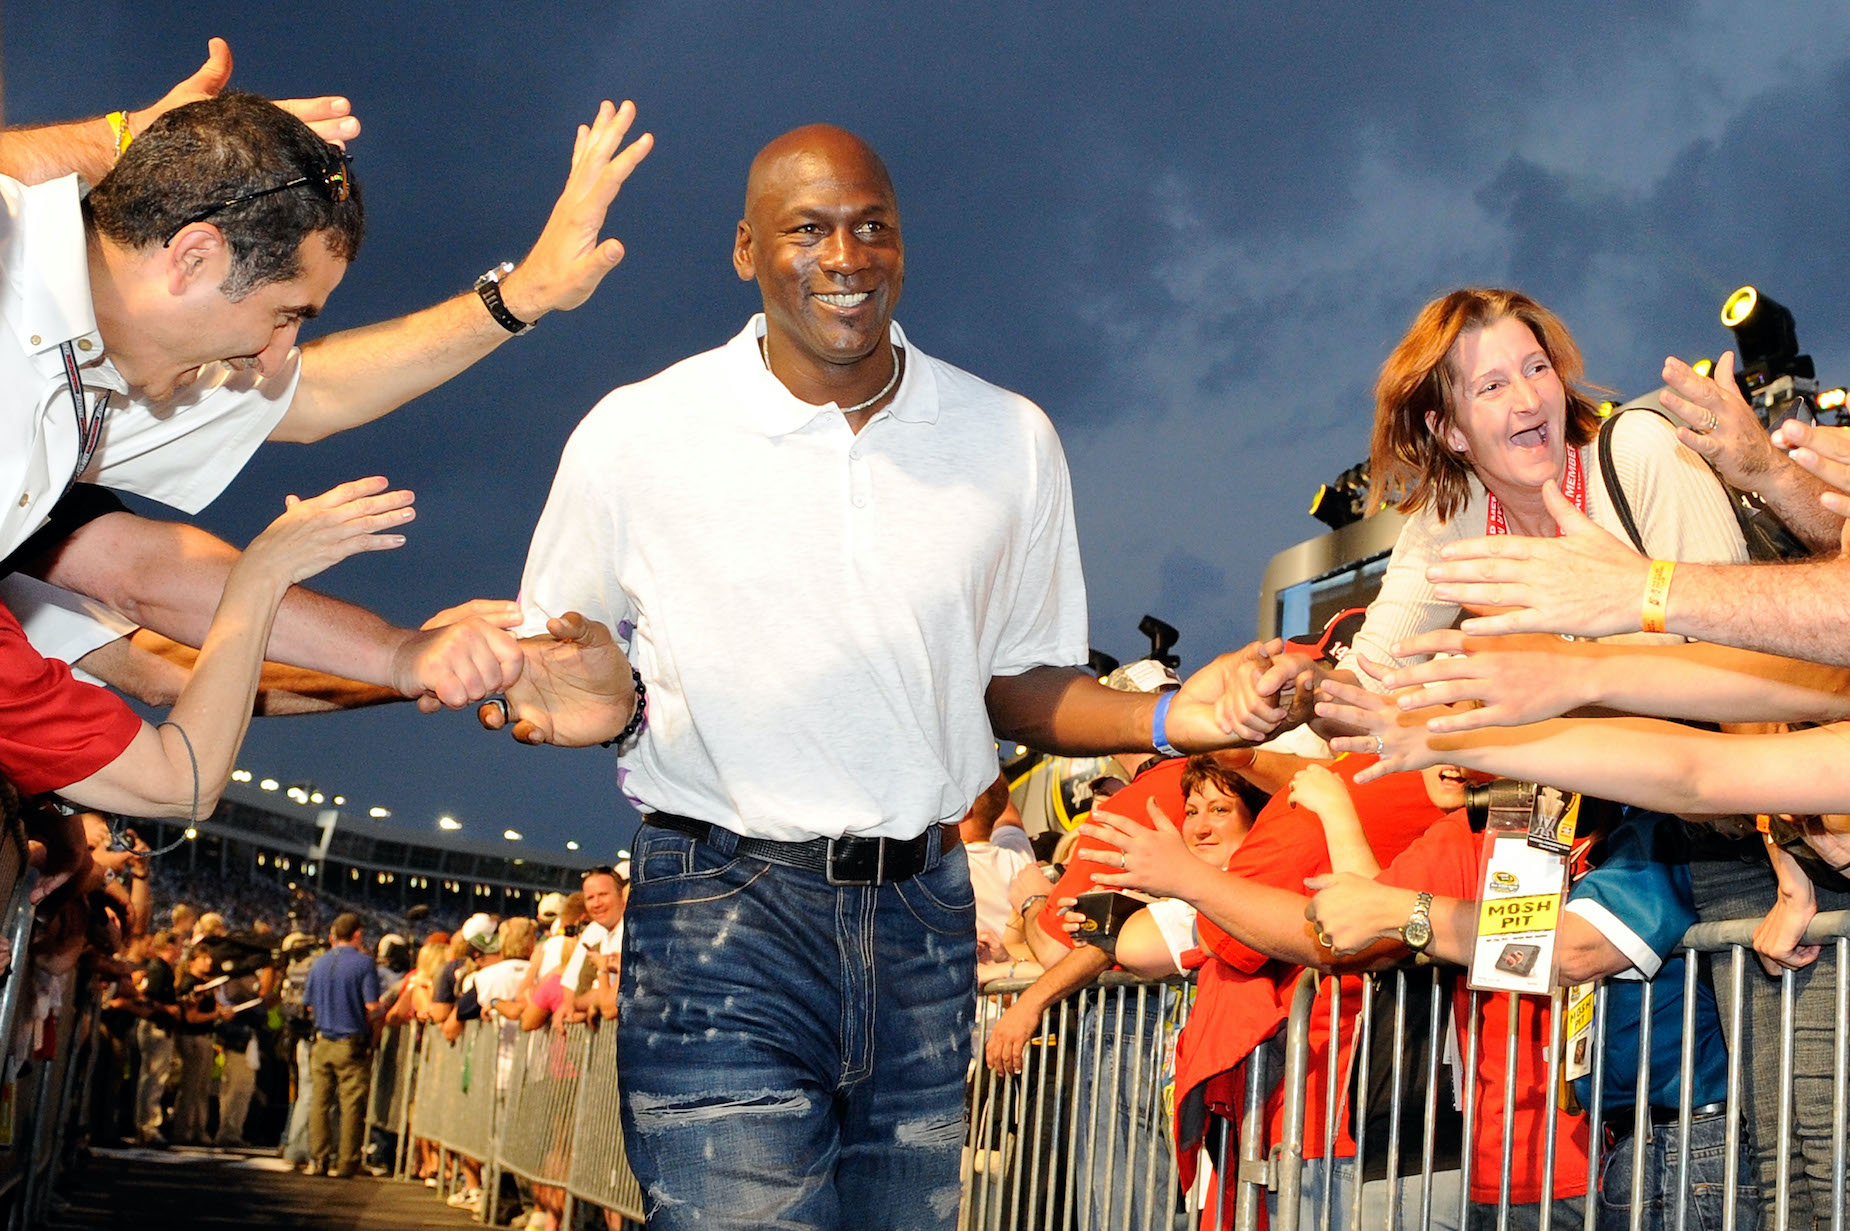 Michael Jordan high fives his fans at a 2010 NASCAR race.